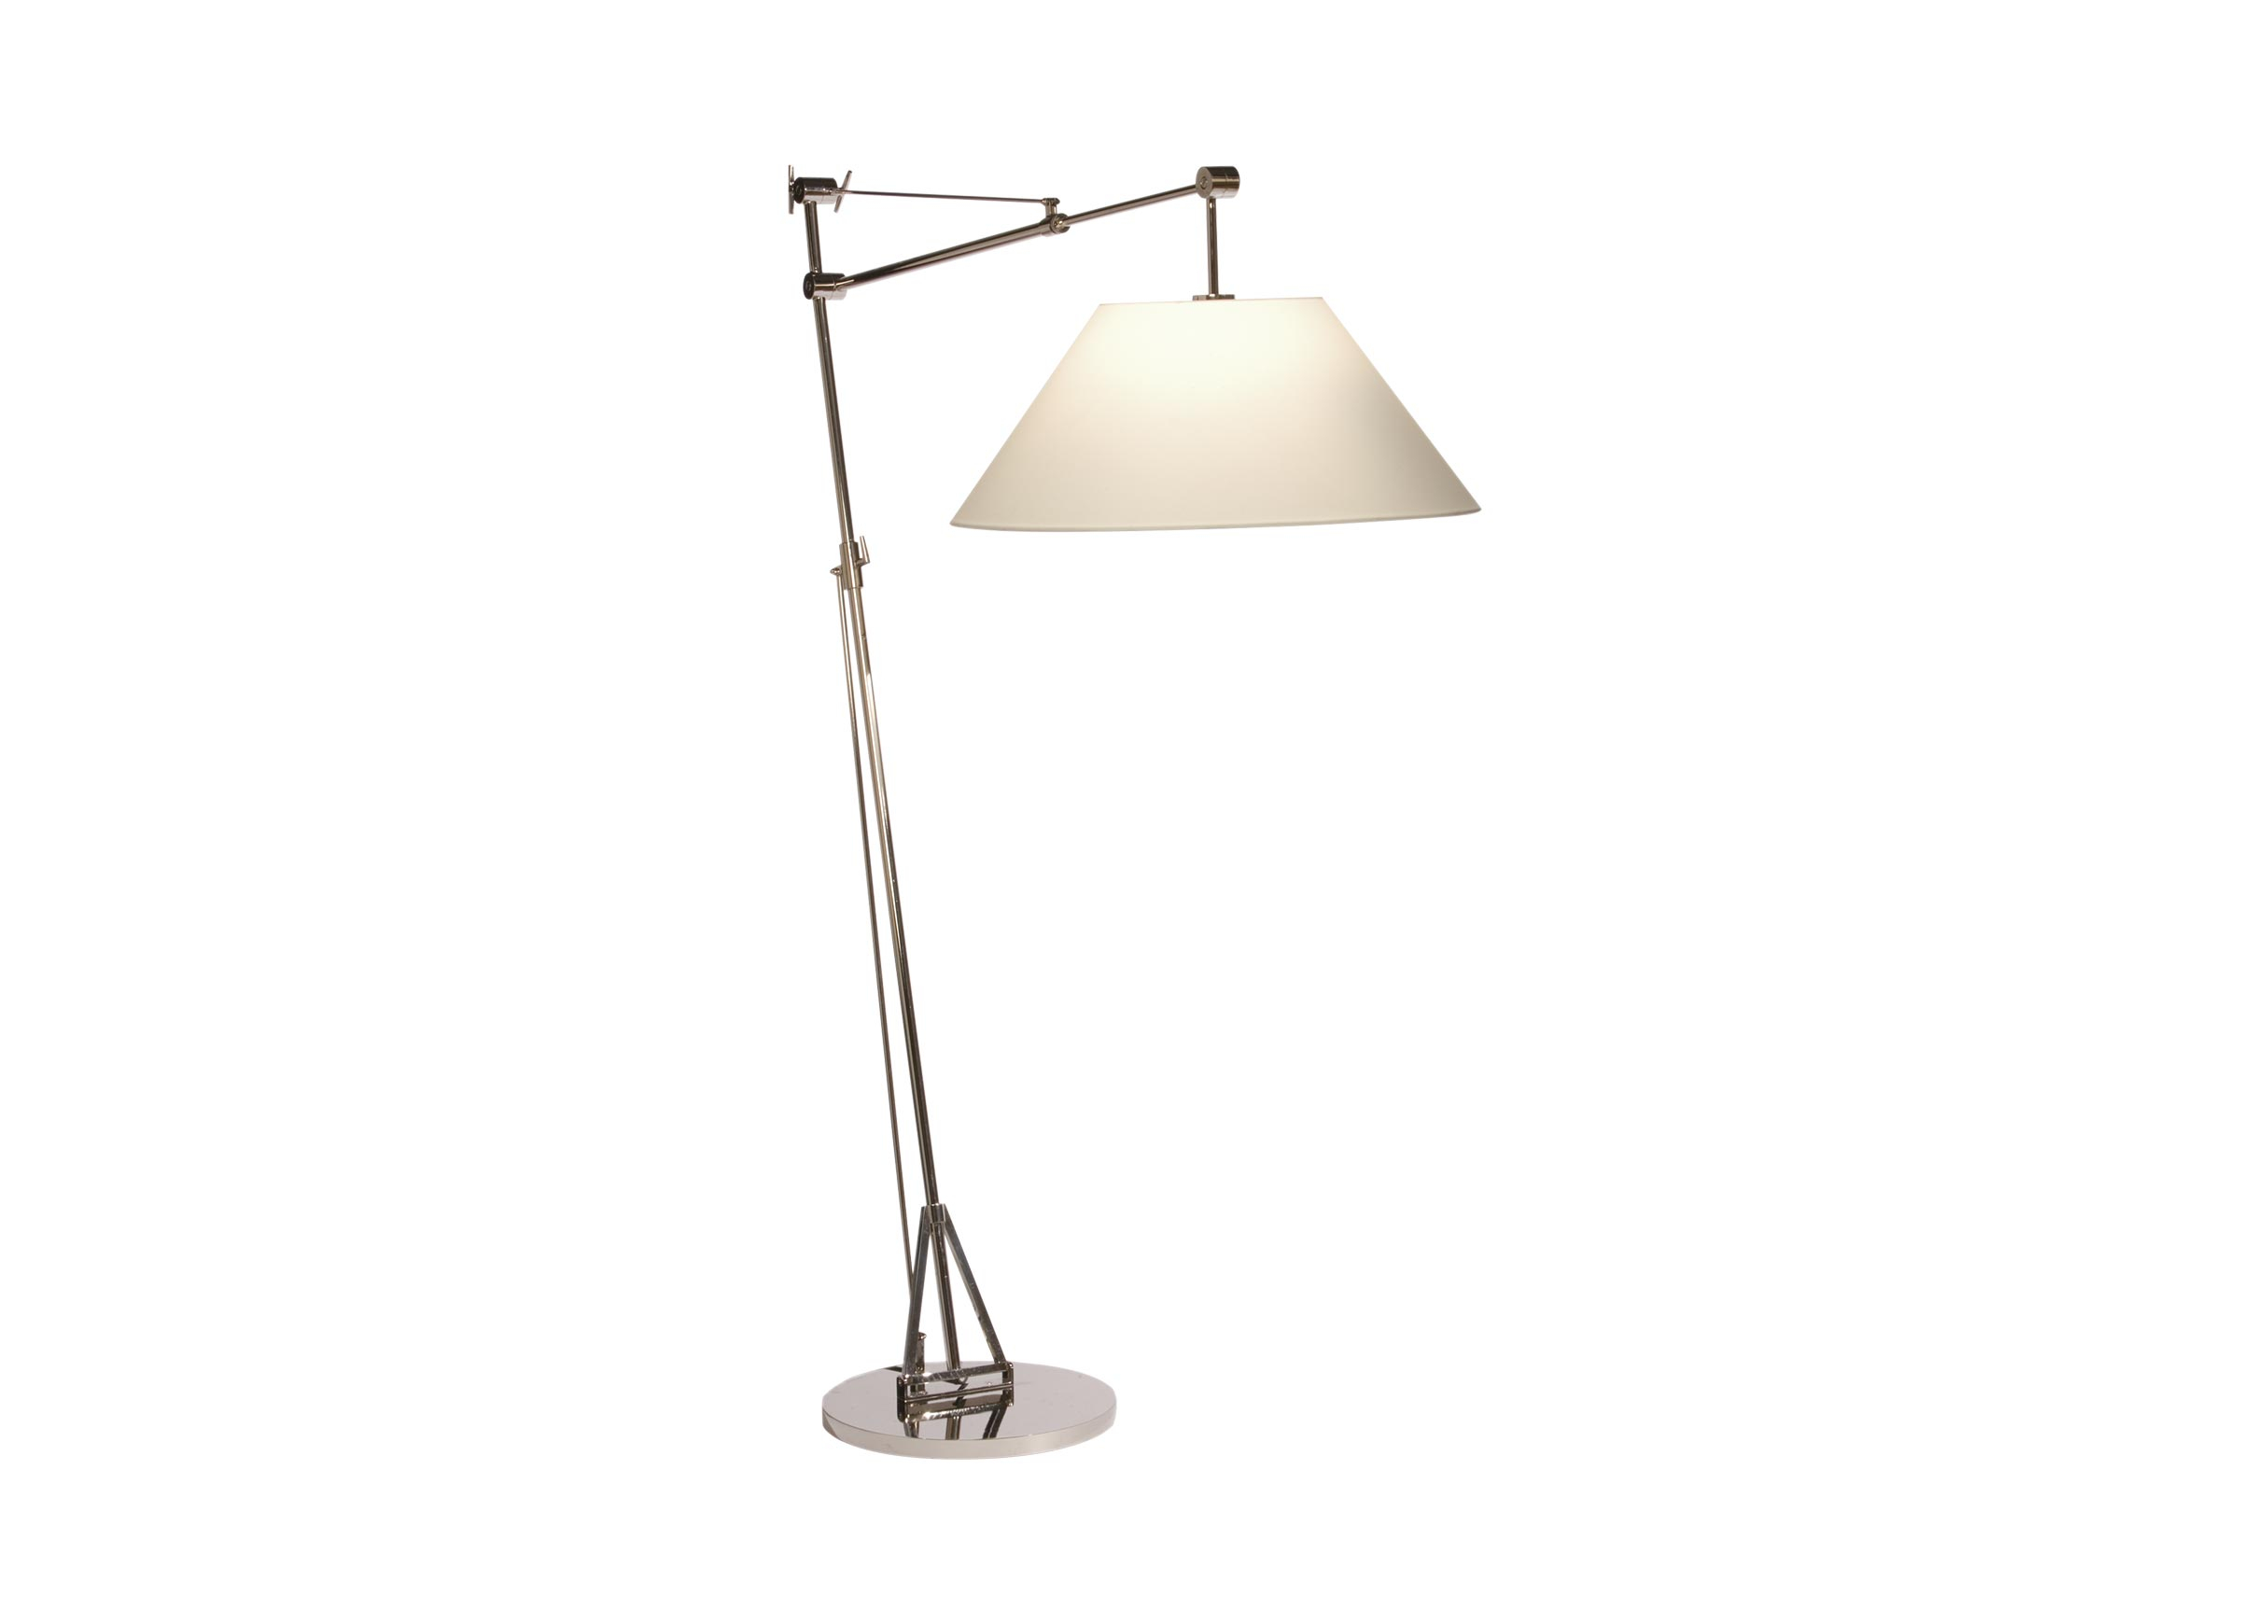 Long Reach Floor Lamp Floor Lamps Ethan Allen within sizing 2430 X 1740